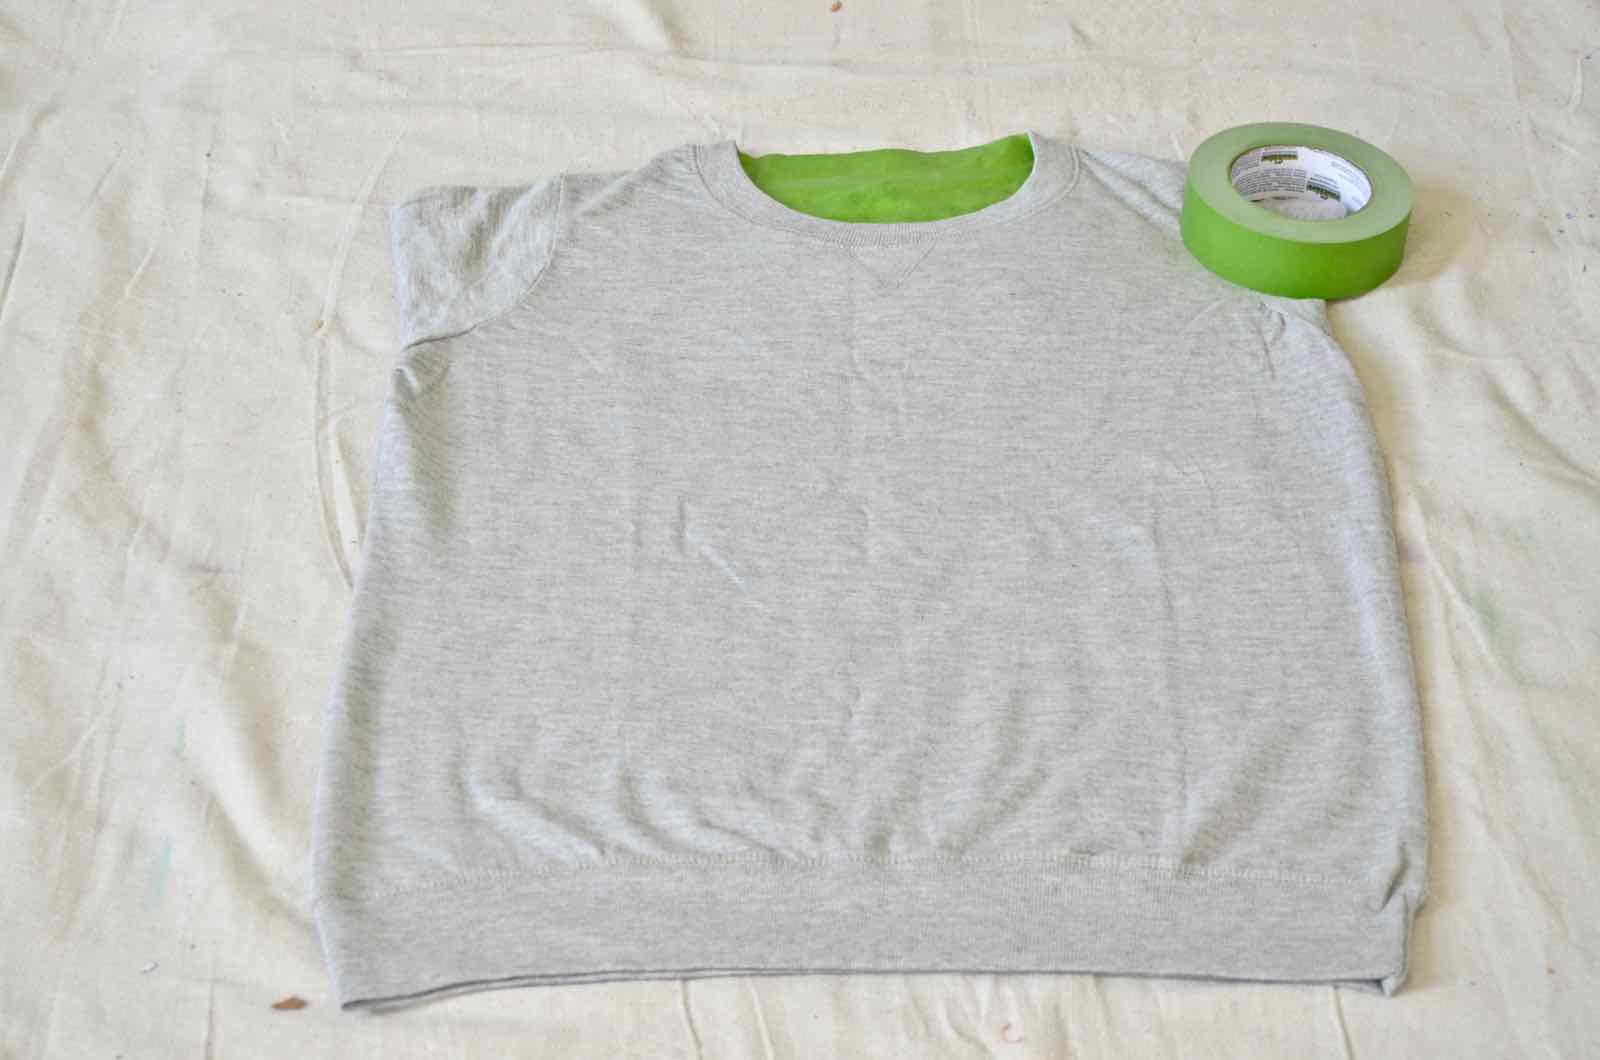 tape of sweatshirt for splatter painting